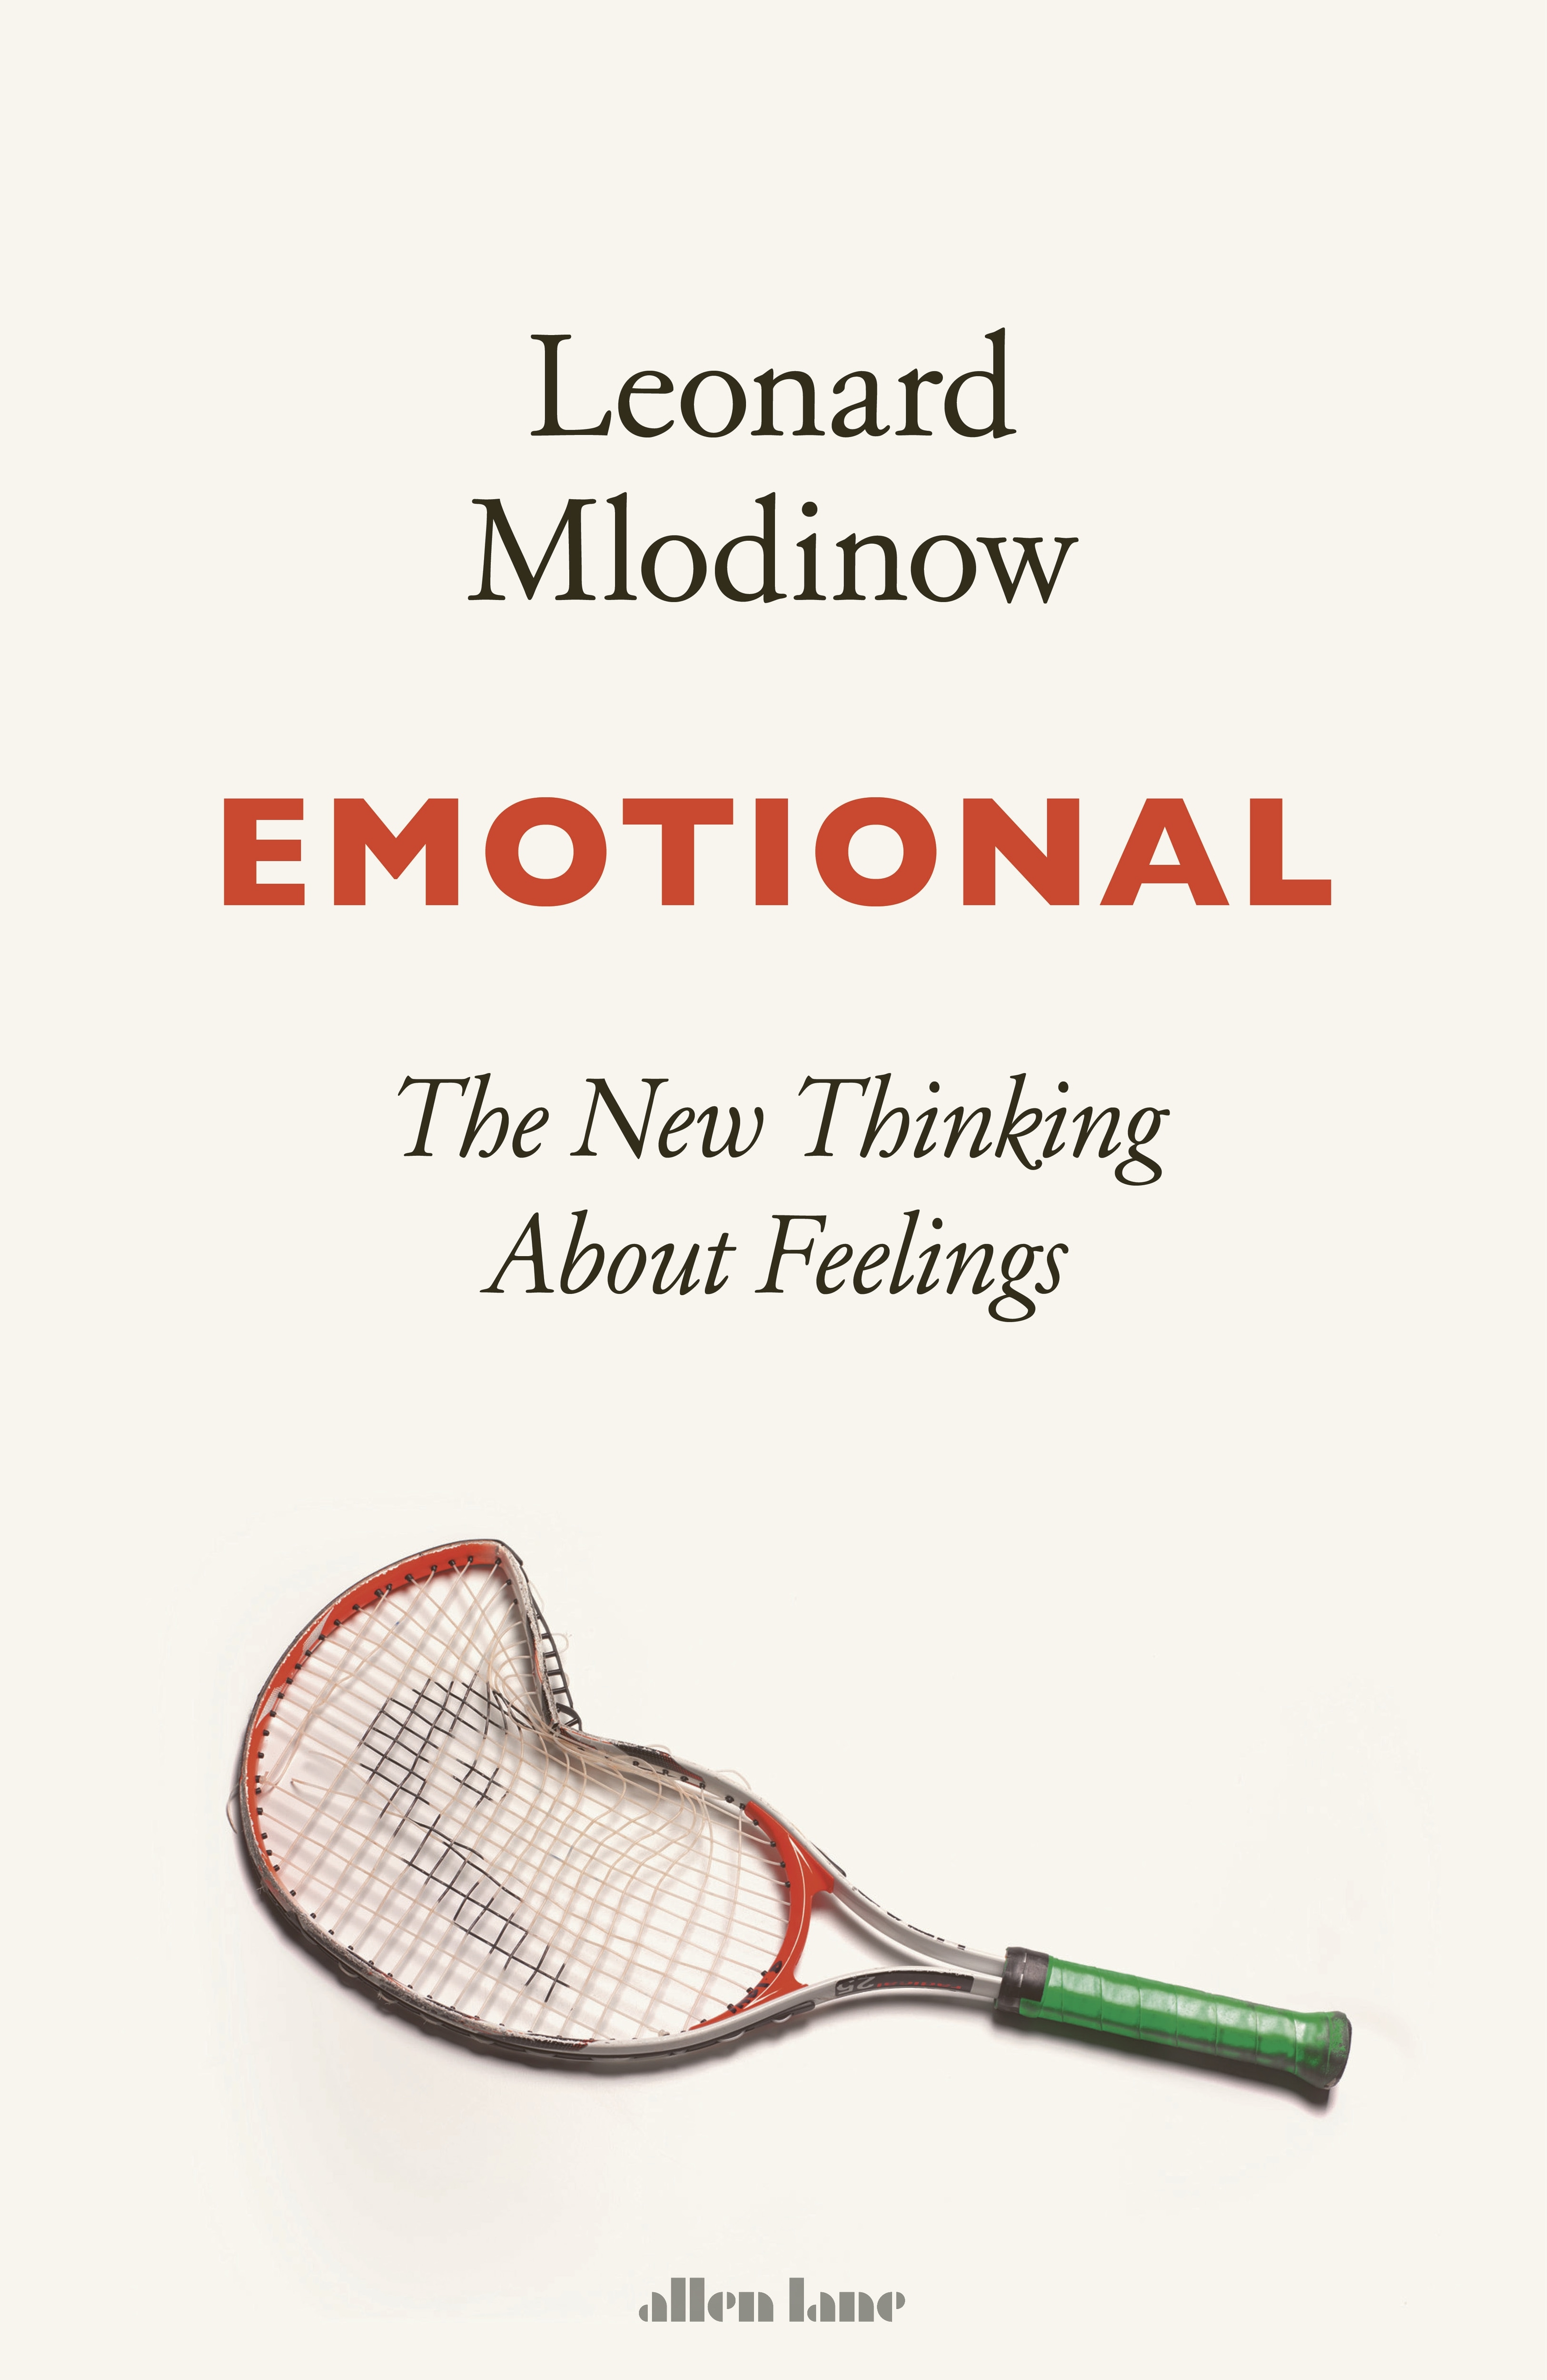 Book “Emotional” by Leonard Mlodinow — January 4, 2022